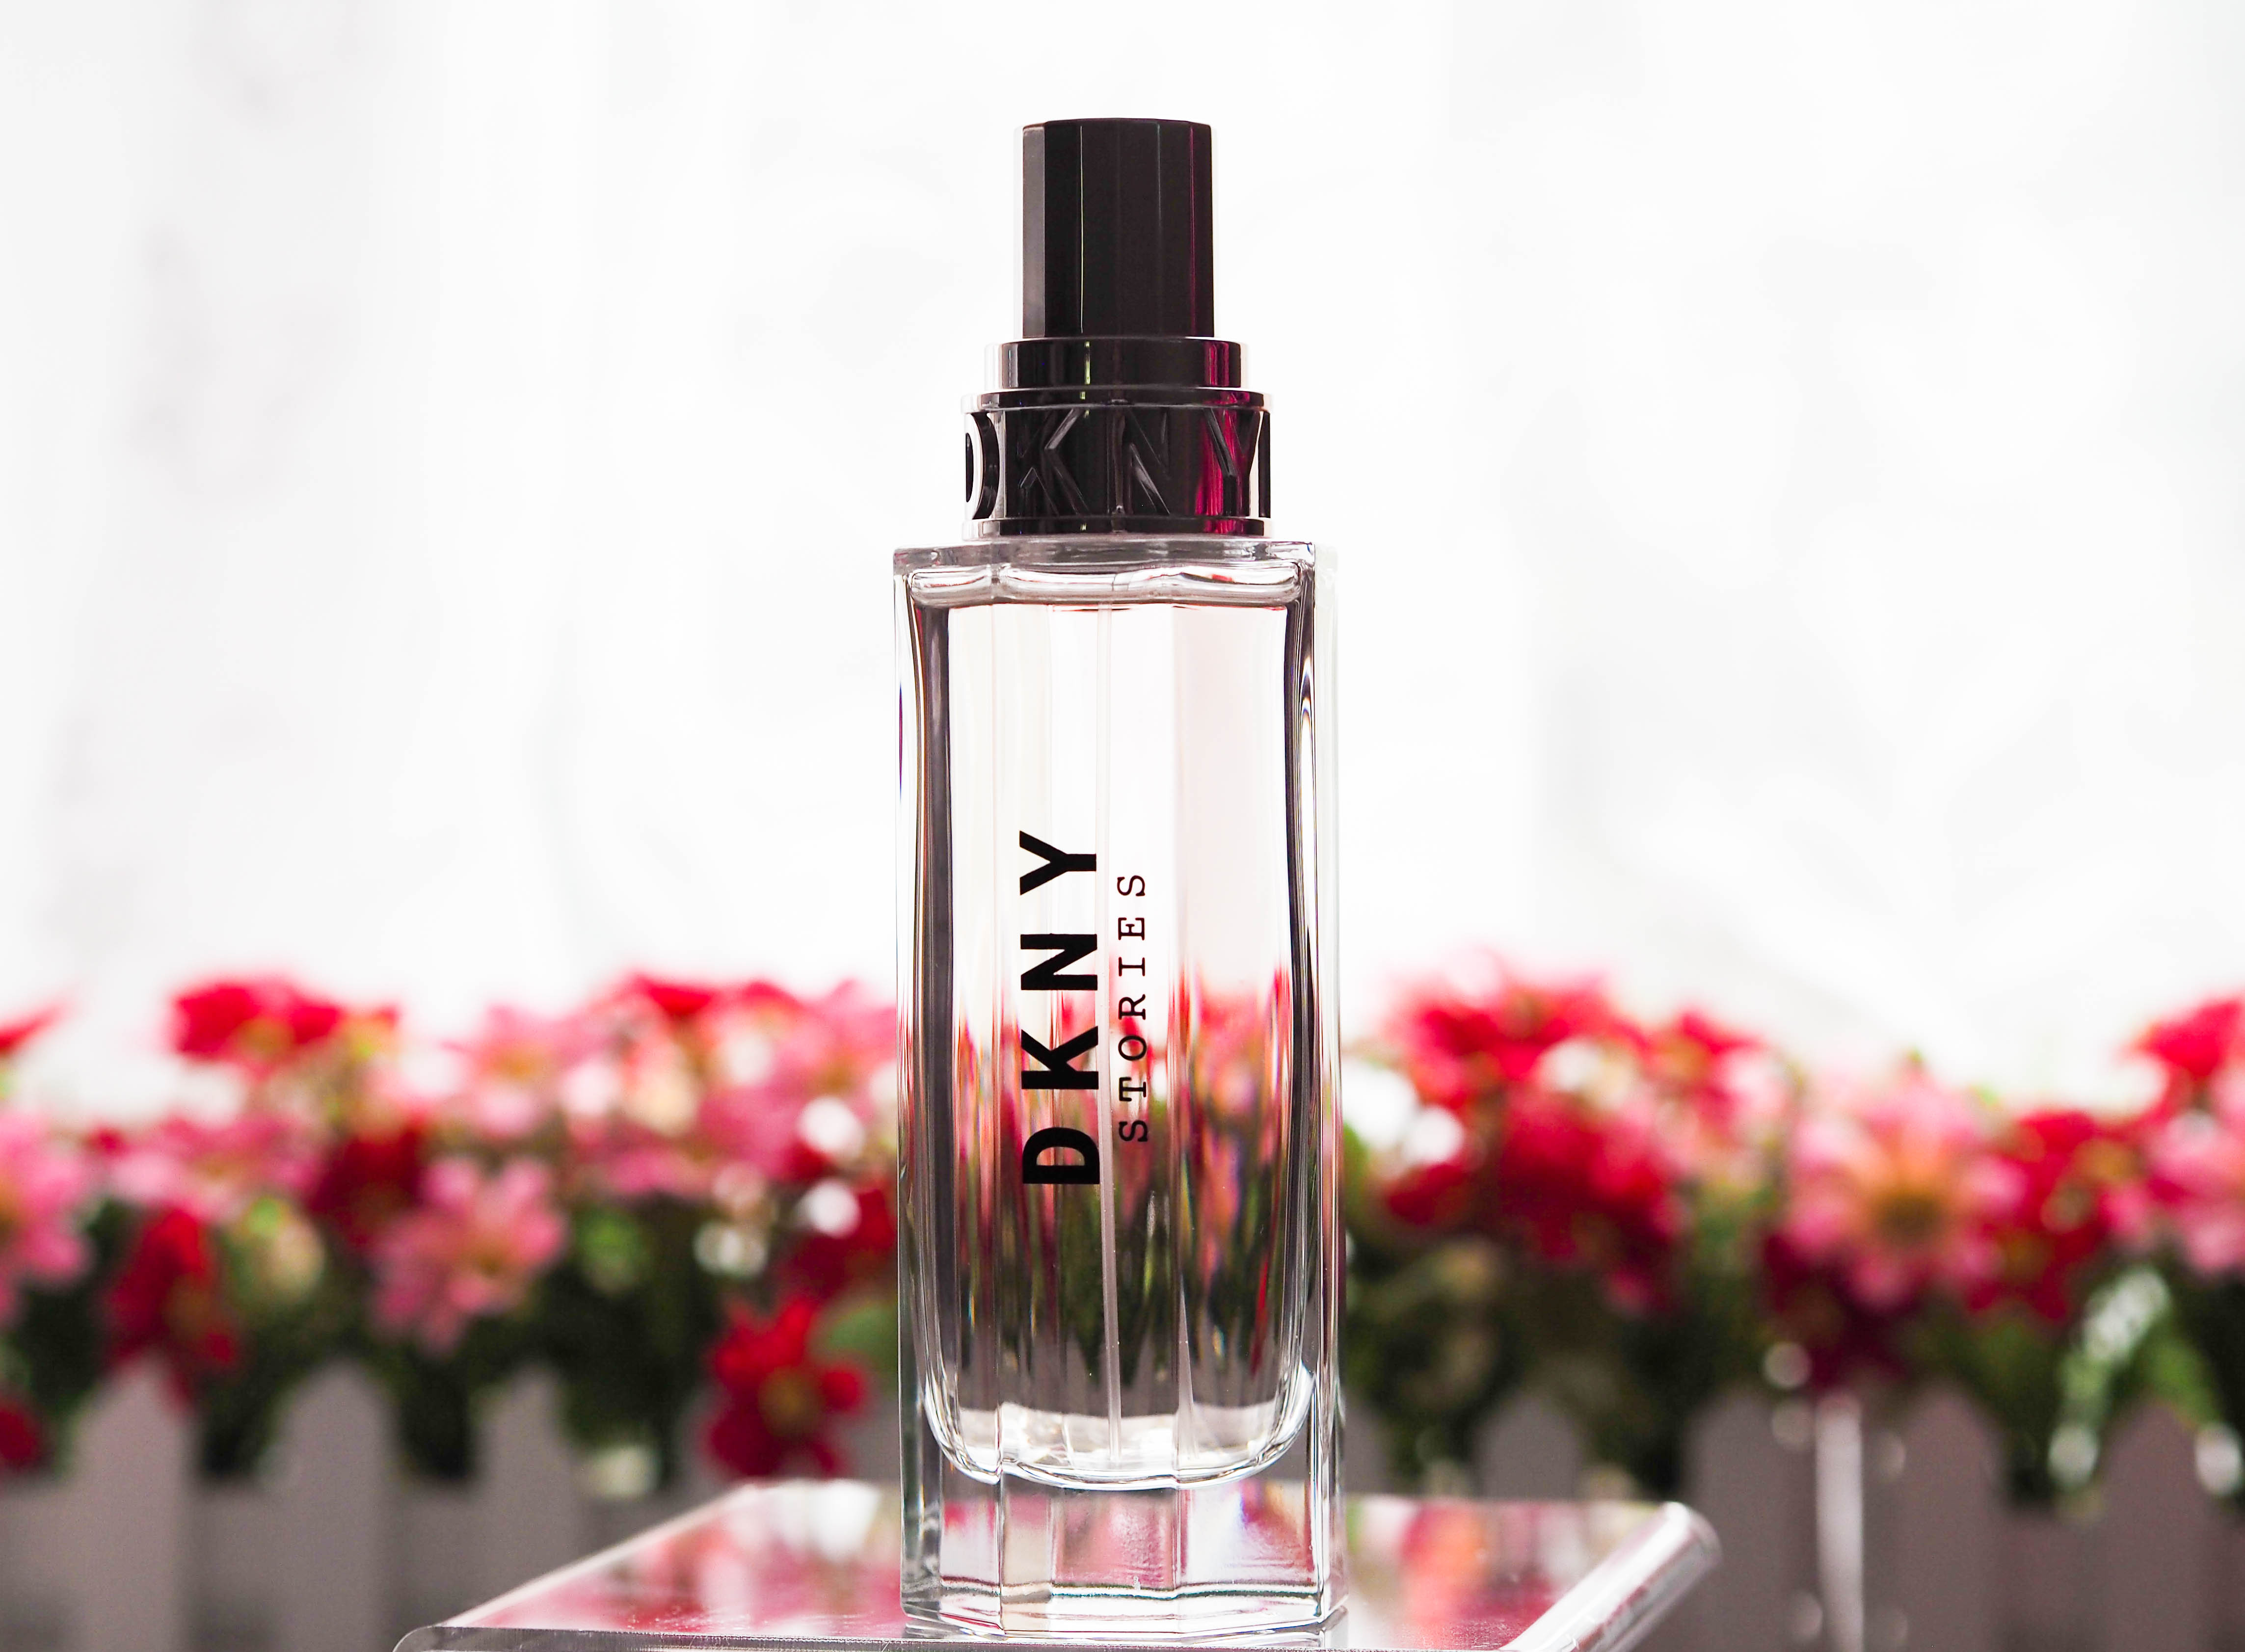 vare Tether Klassificer DKNY Stories Fragrance Review - Beauty Geek UK